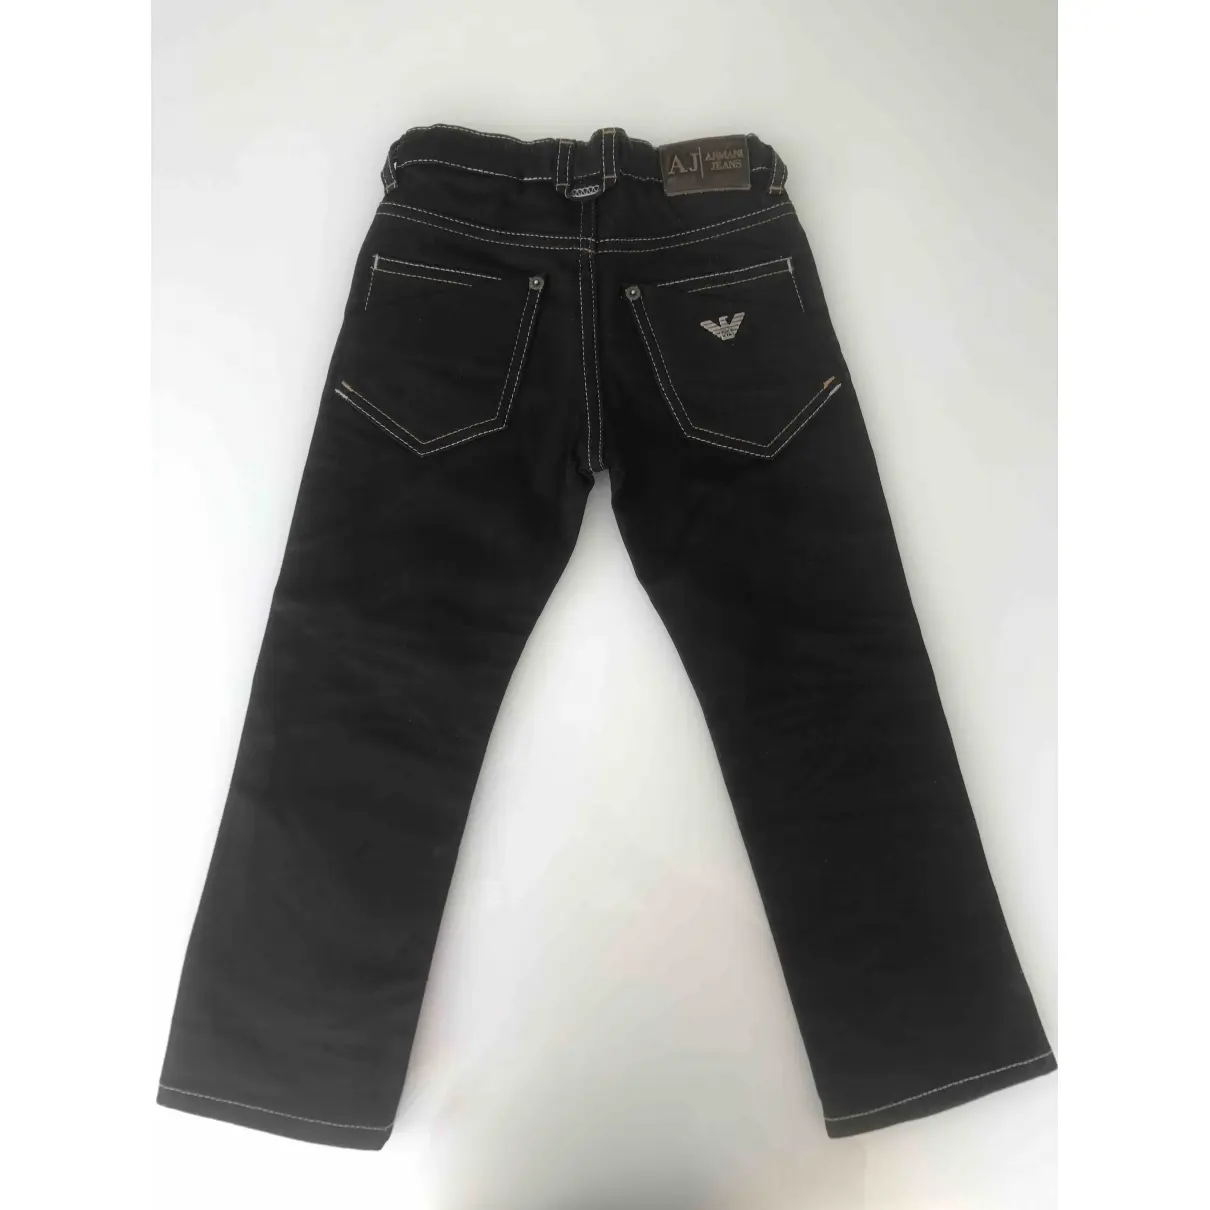 Buy Armani Jeans Jeans online